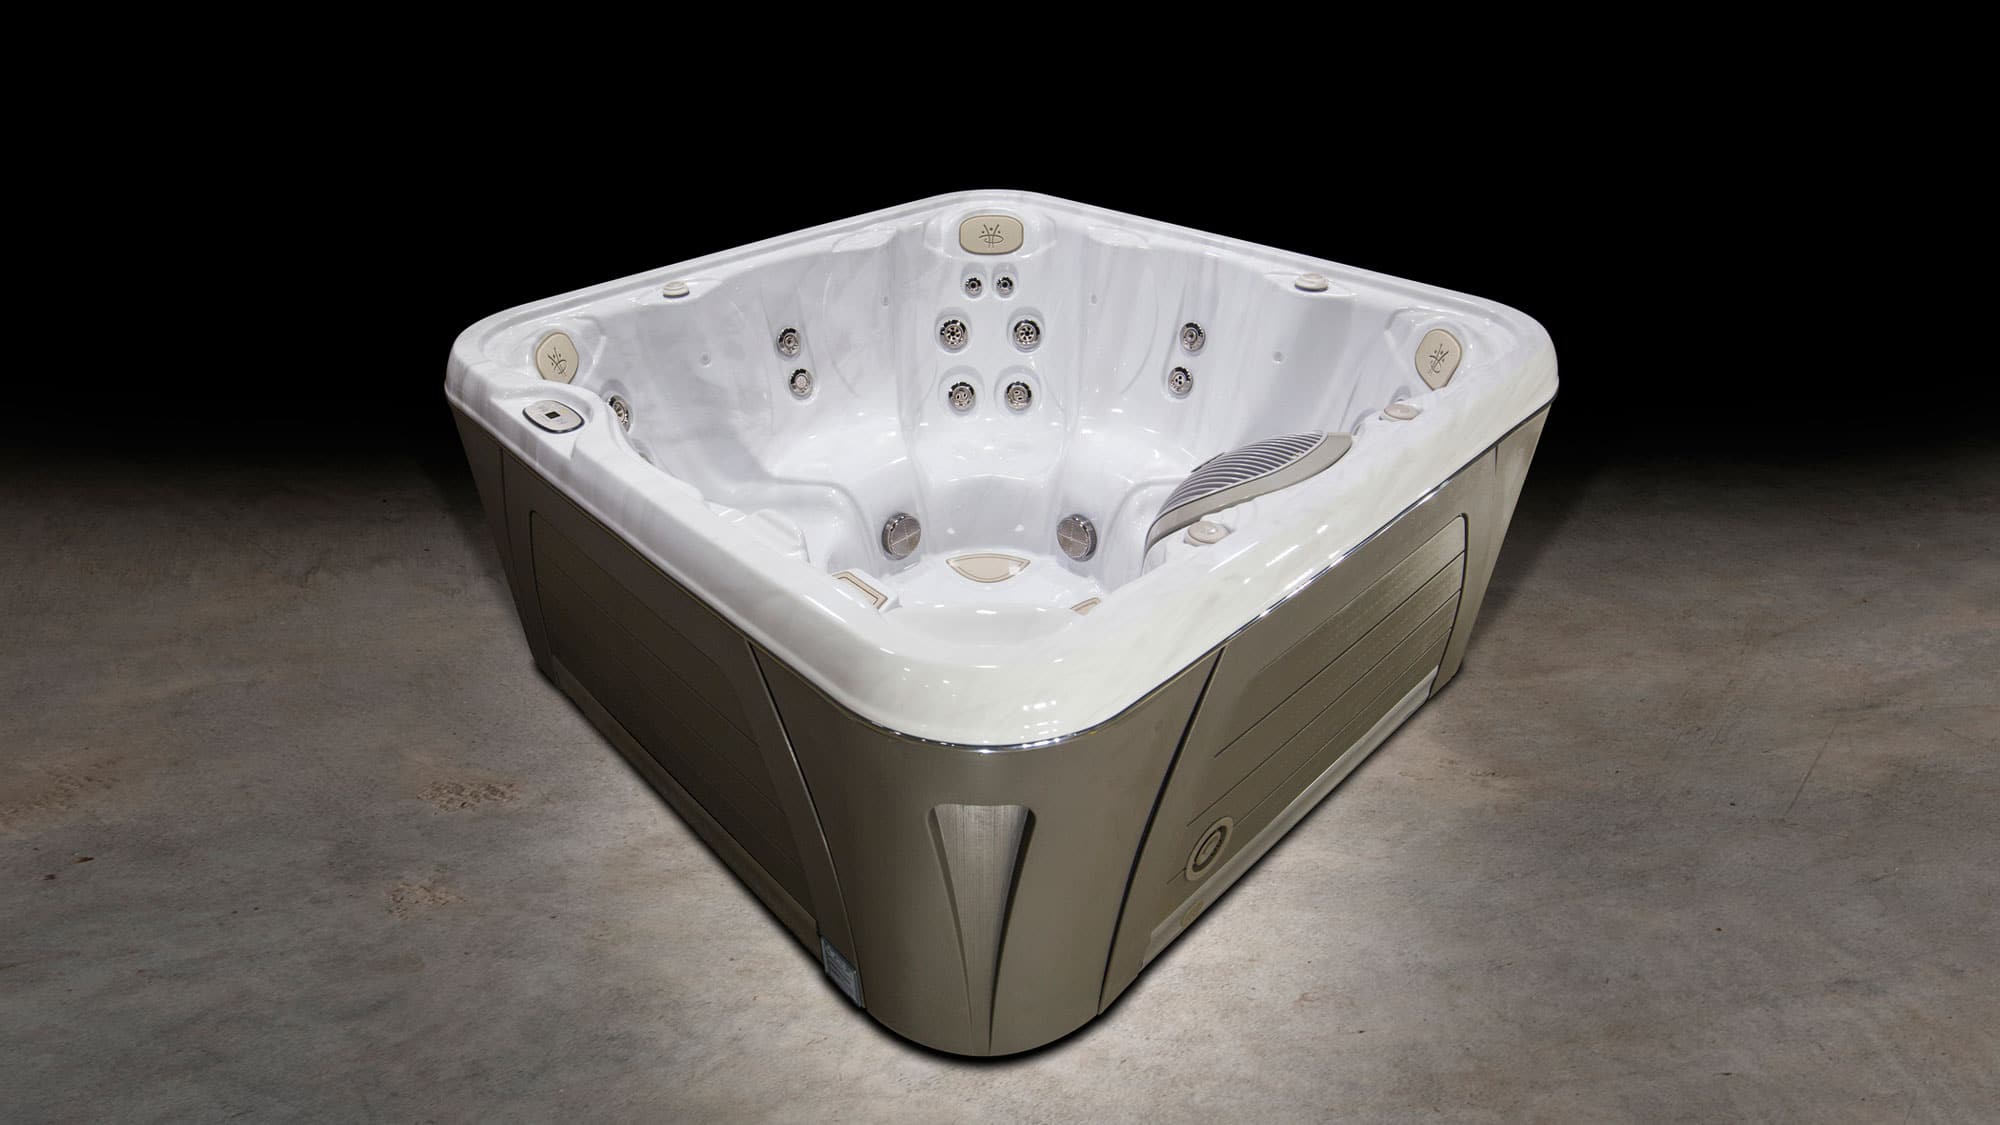 How To Drain A Hot Tub Properly Hot Tub Hot Tub Garden Hot Tub Reverasite 